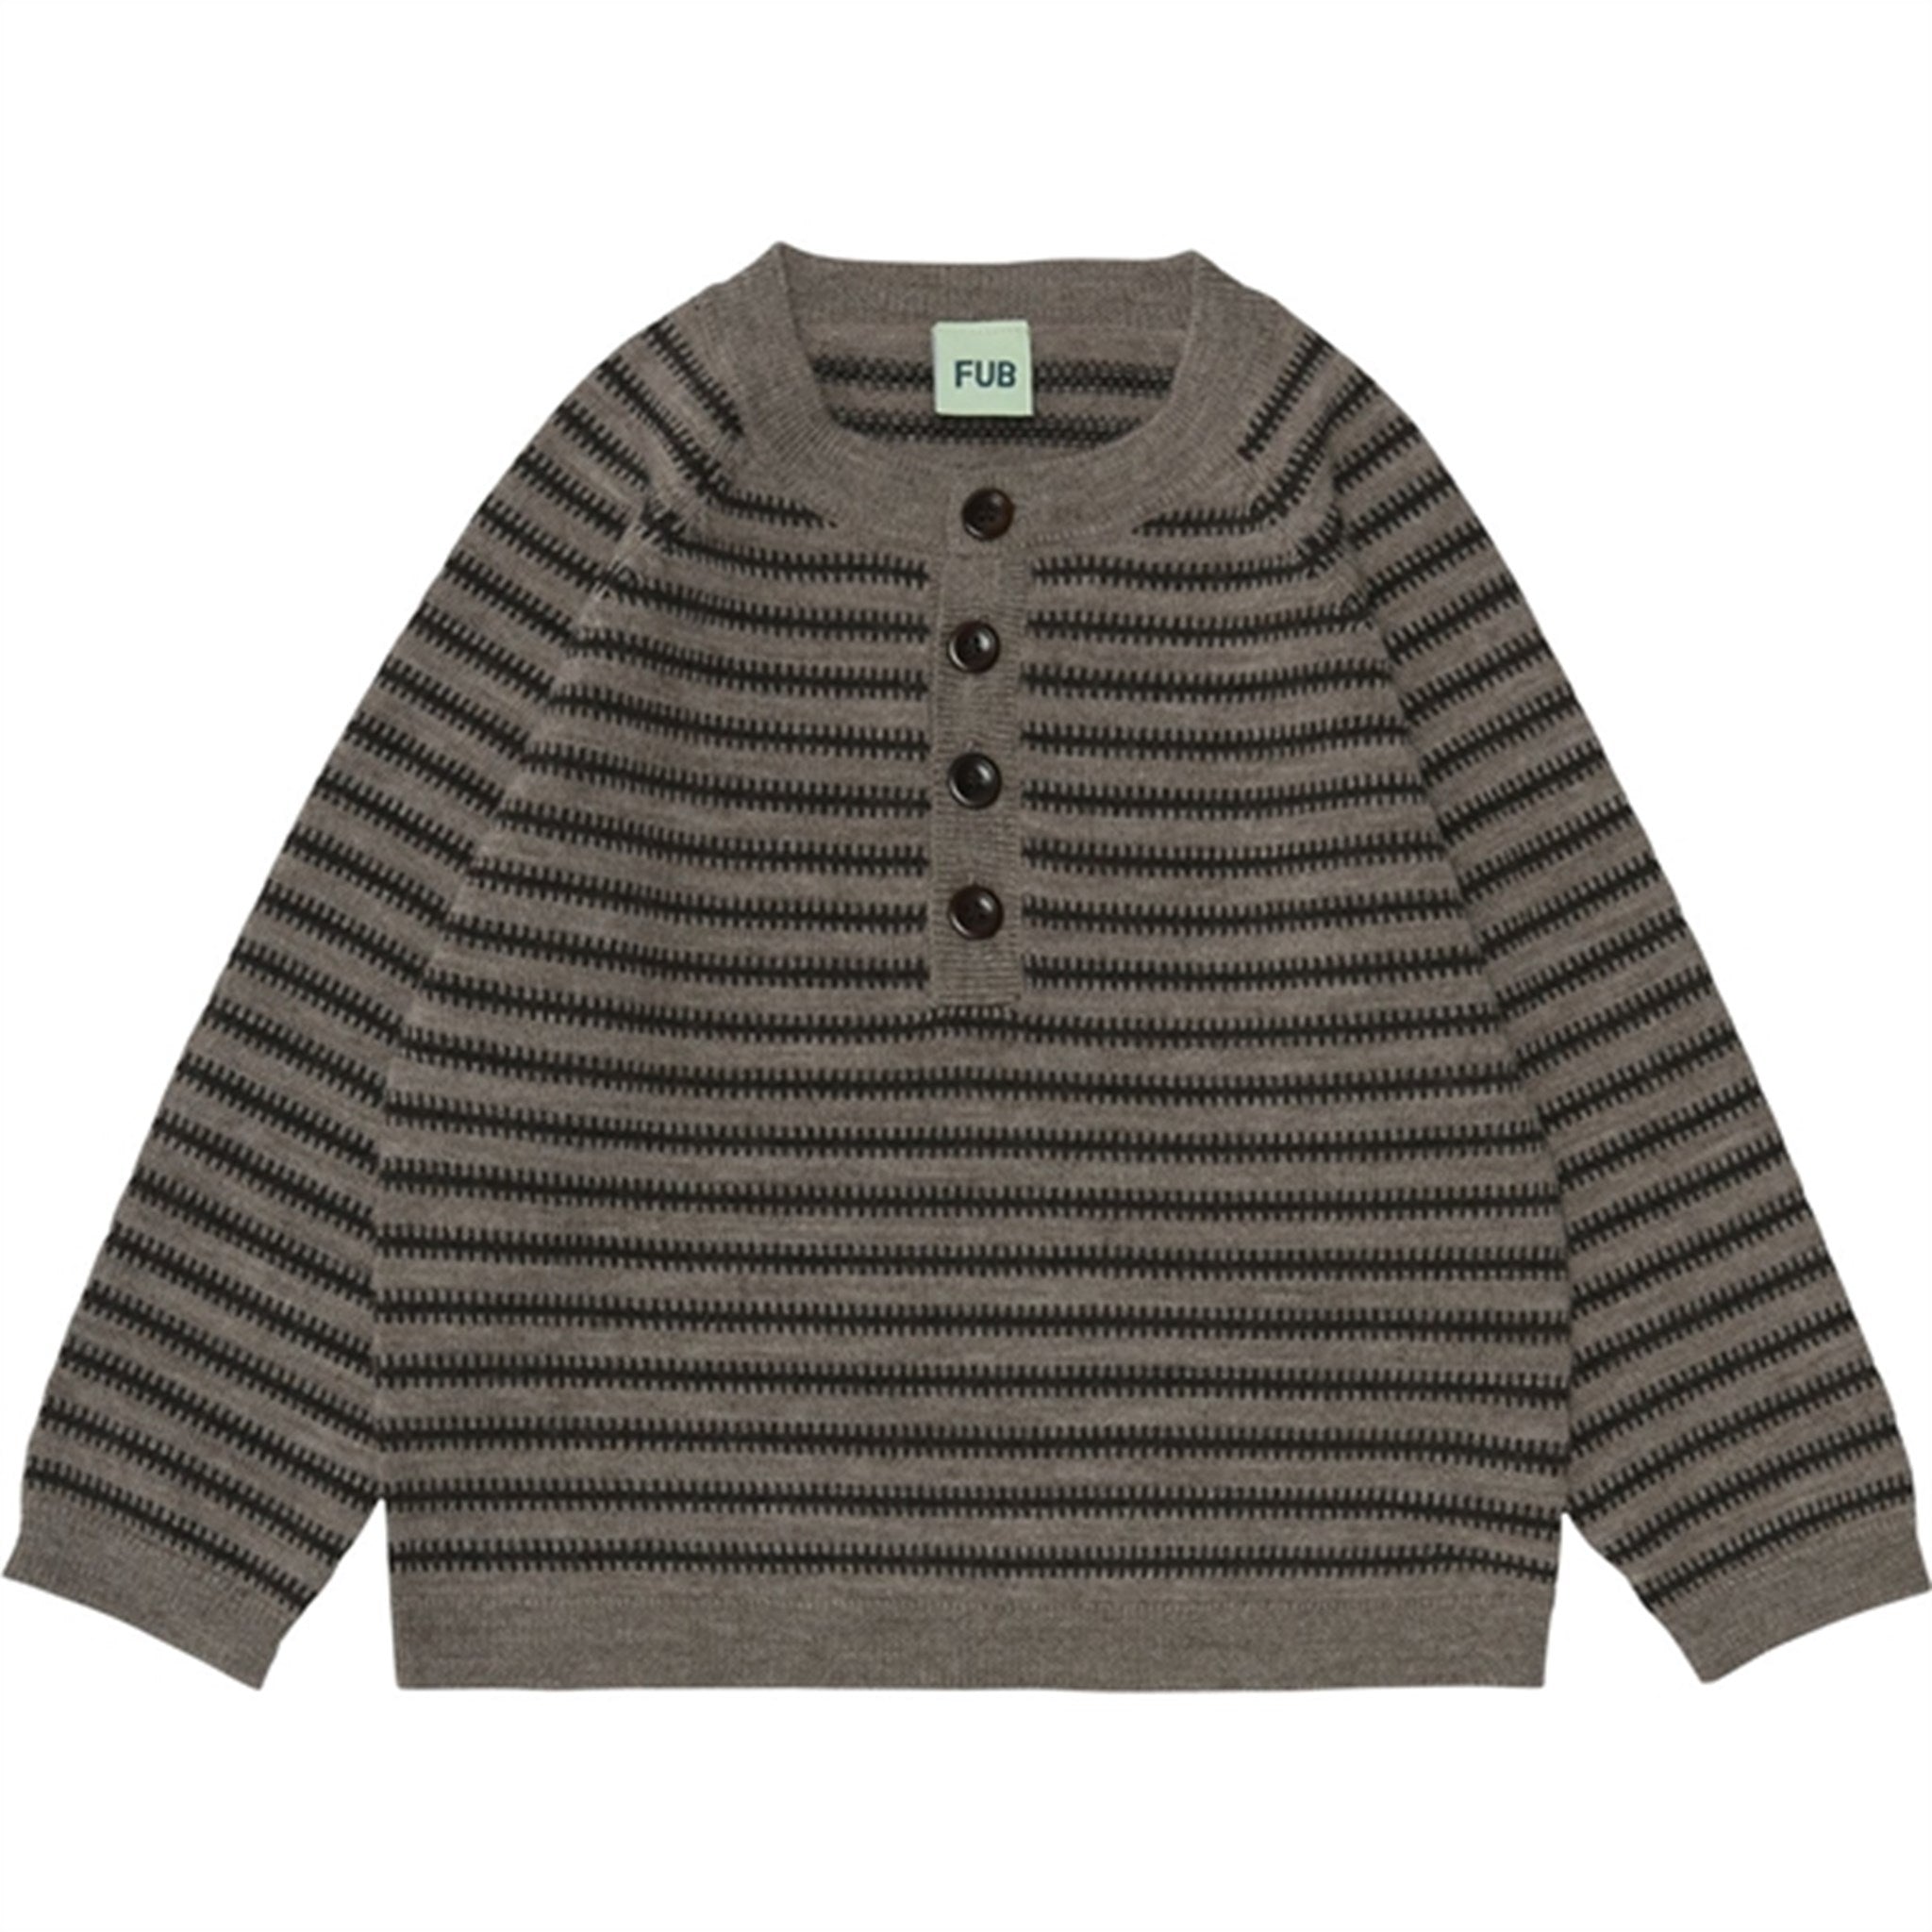 FUB Knitted Sweater Beige Melange/Chocolate